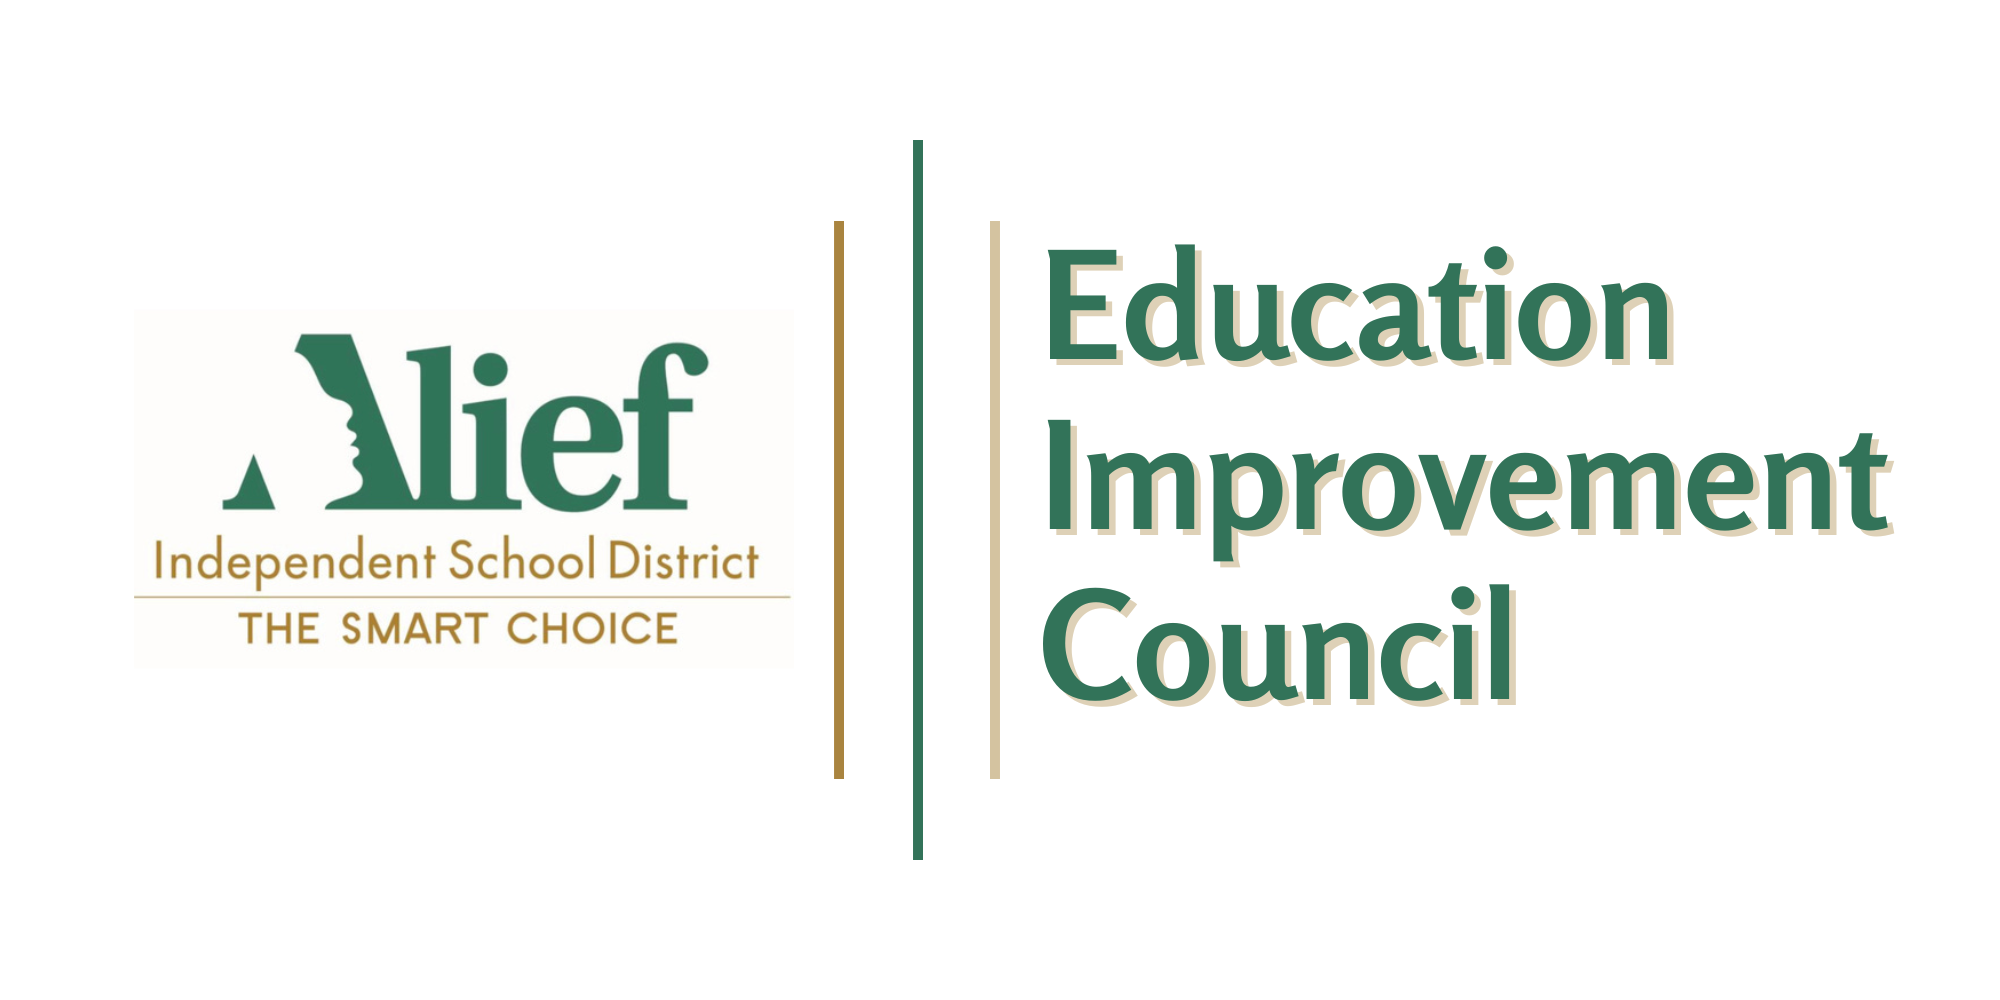 Educational Improvement Council